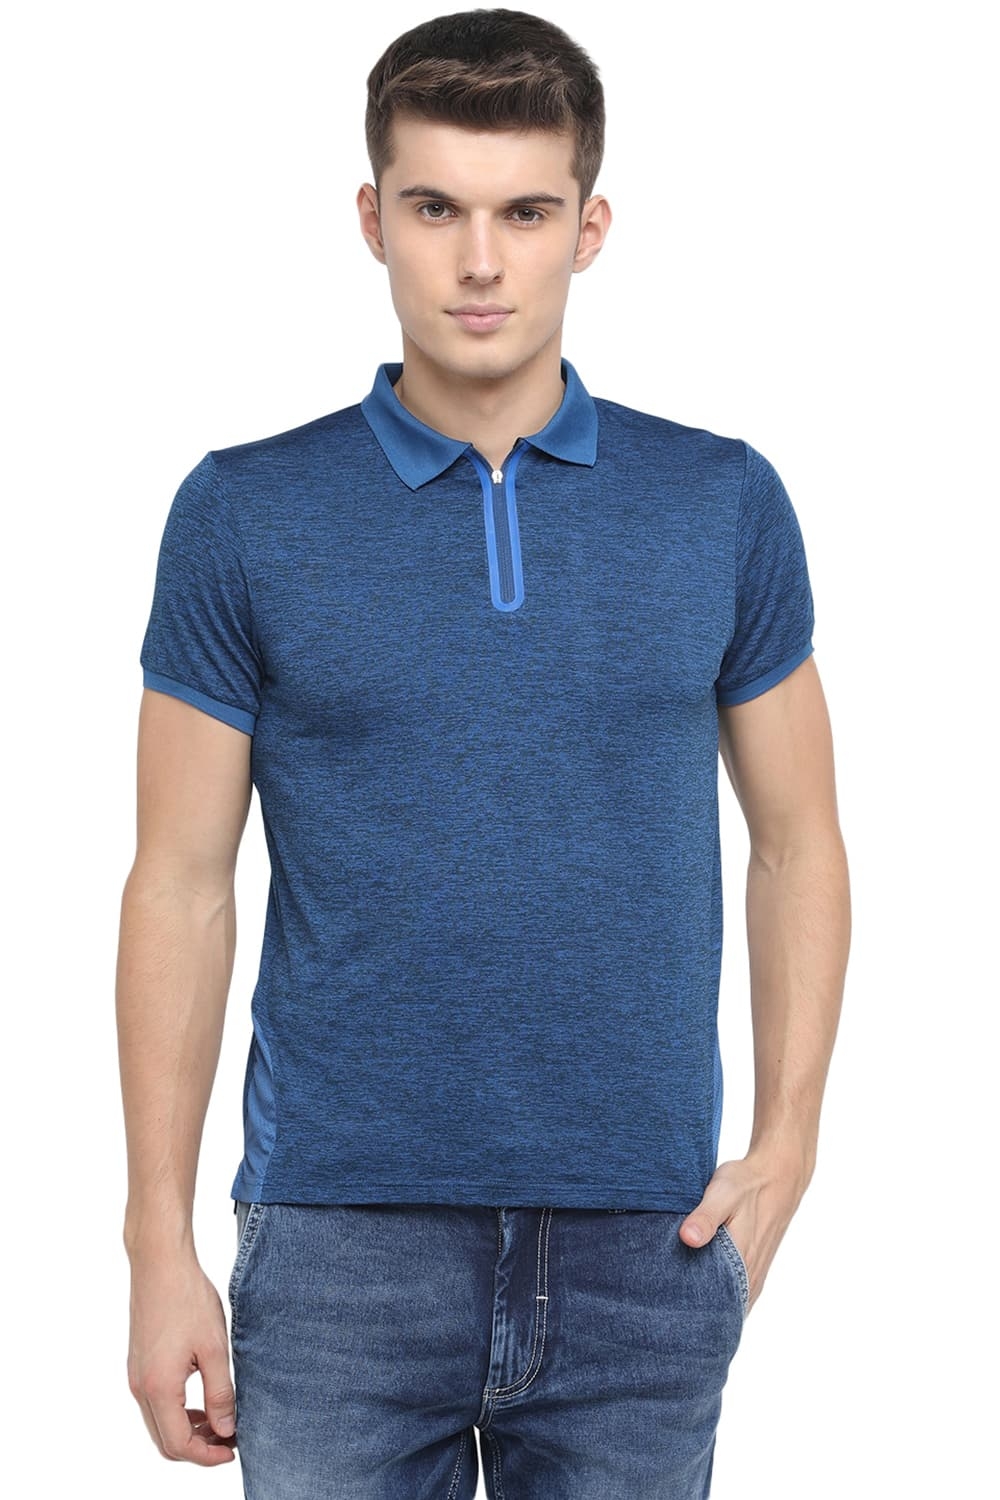 BASICS | Basics Muscle Fit Twilight Blue Polo T Shirt